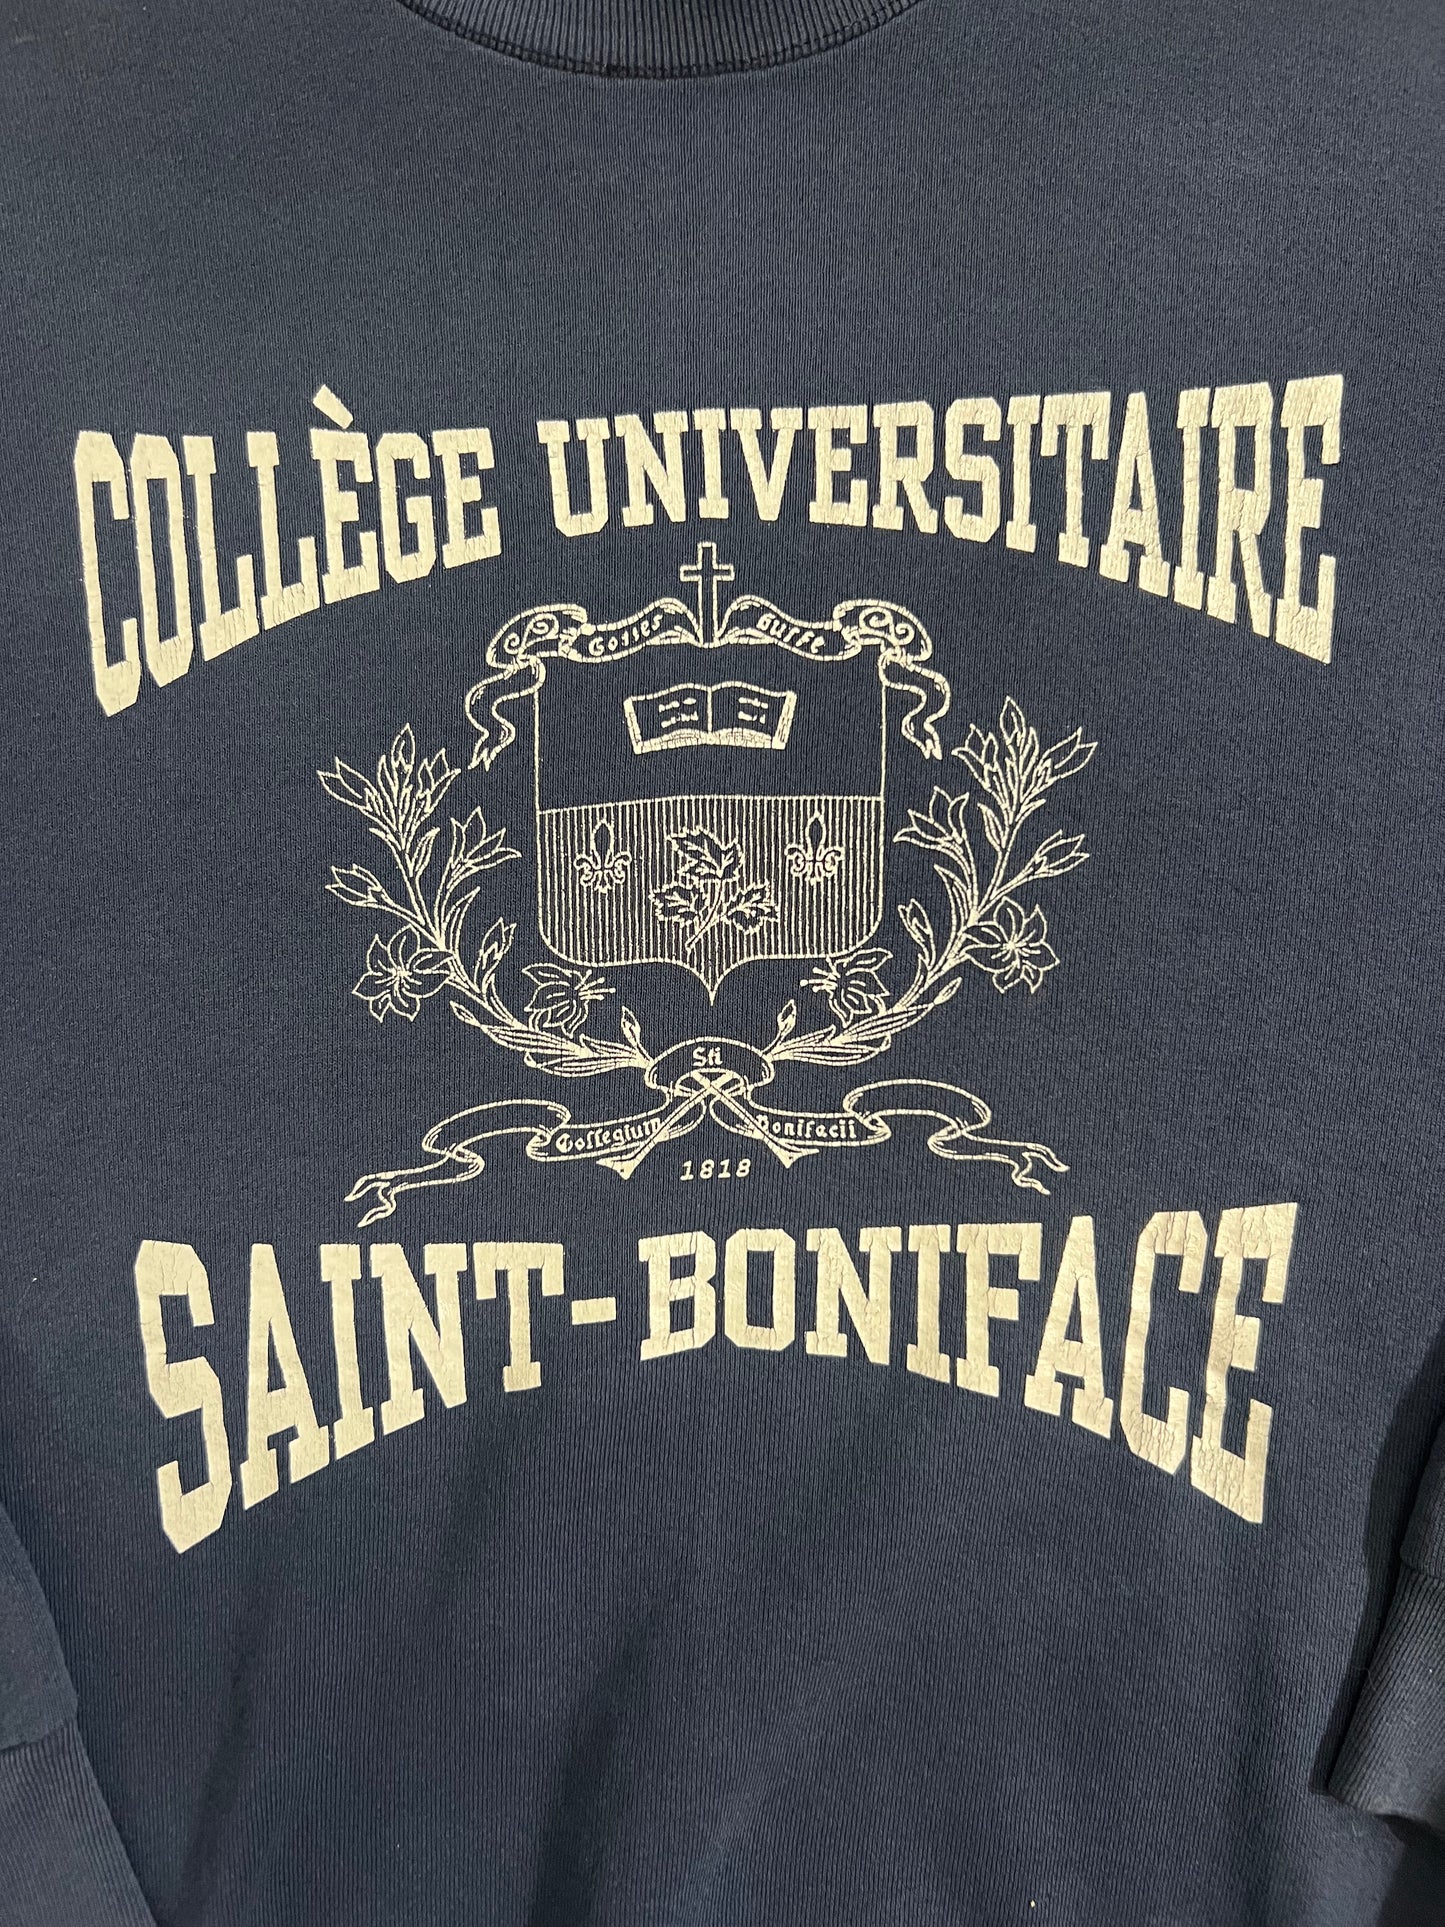 Vintage College University Saint Boniface Sweatshirt